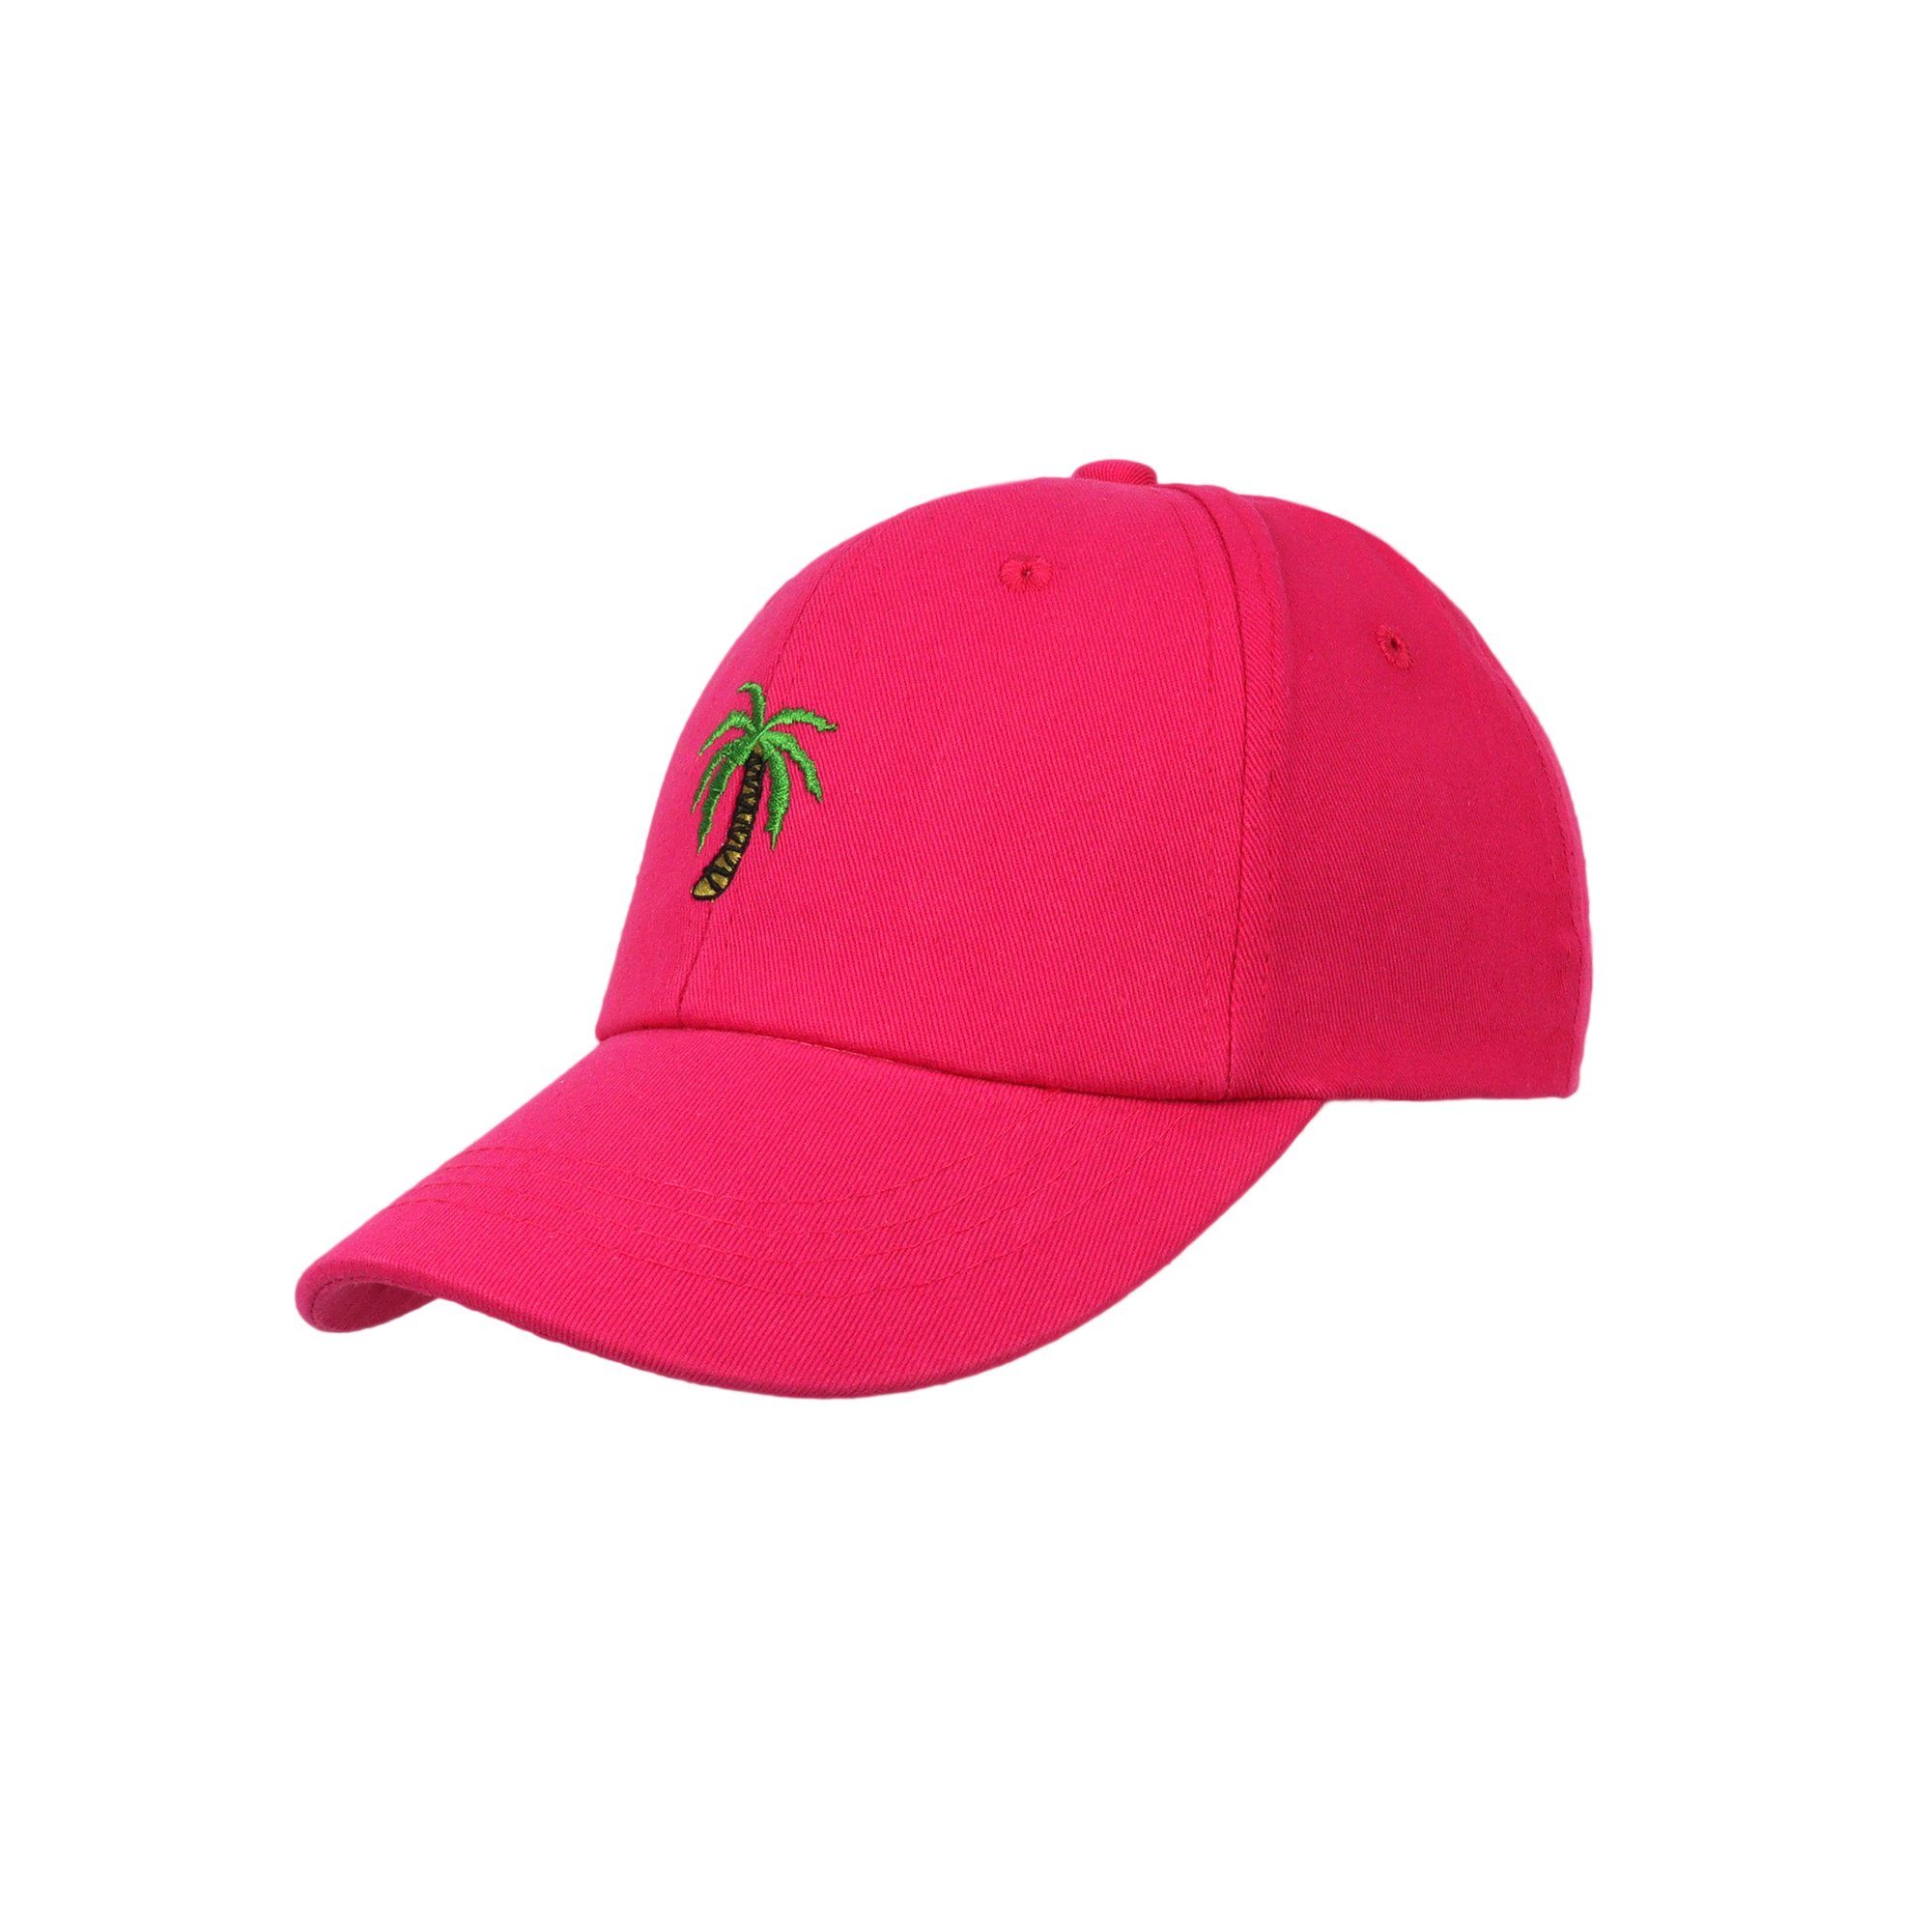 Kinder ZEBRO Cap Cap Baseball Belüftungslöcher pink mit